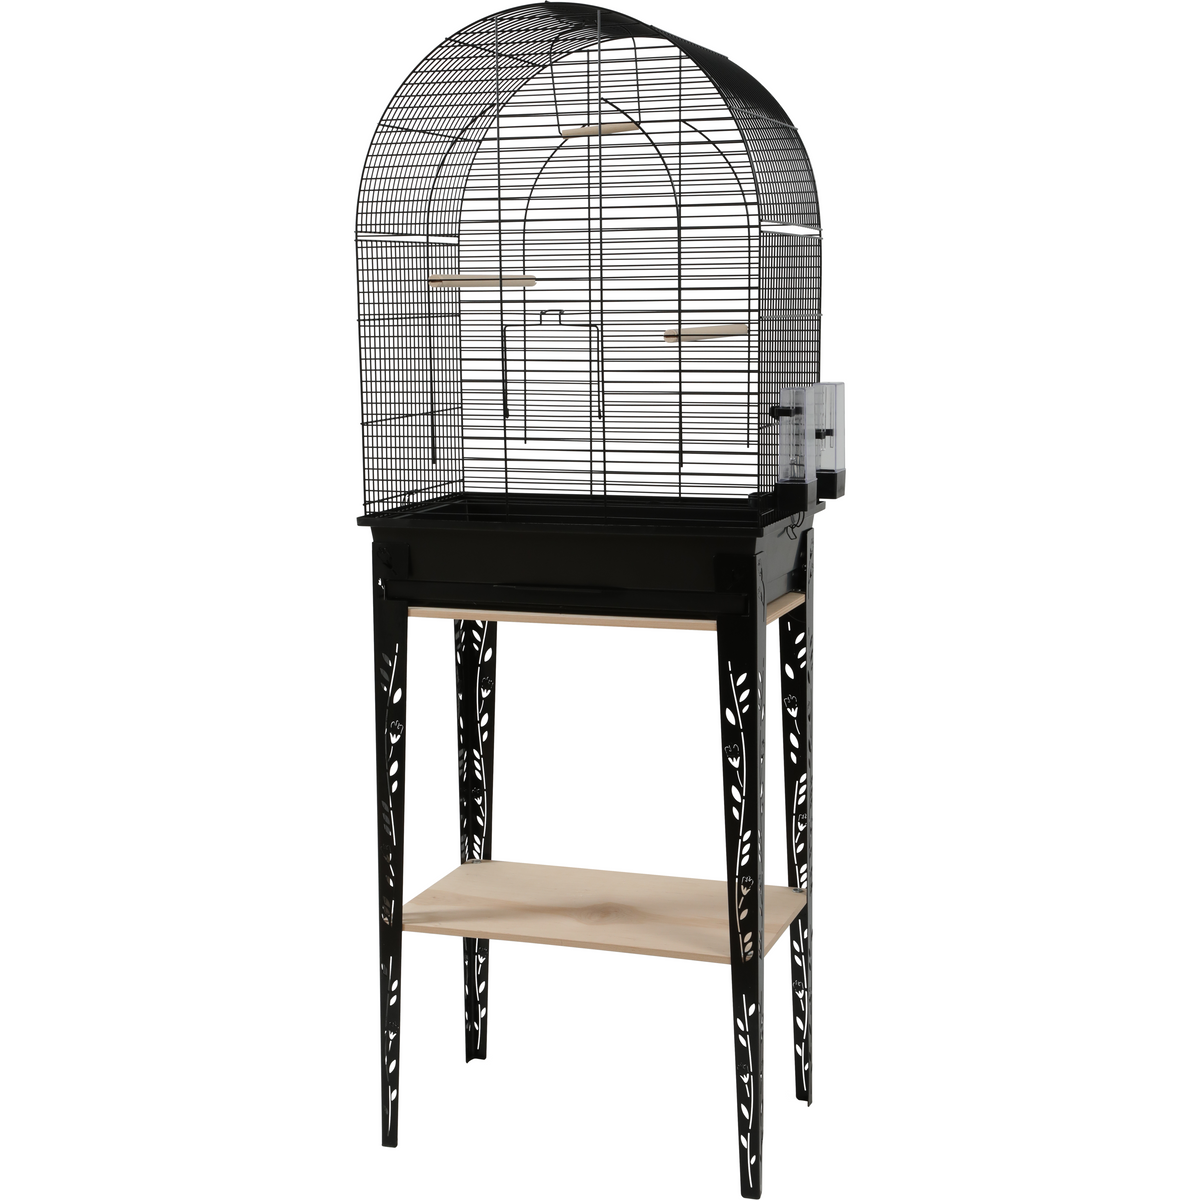 Zolux Chic Patio Bird Cage (Large)